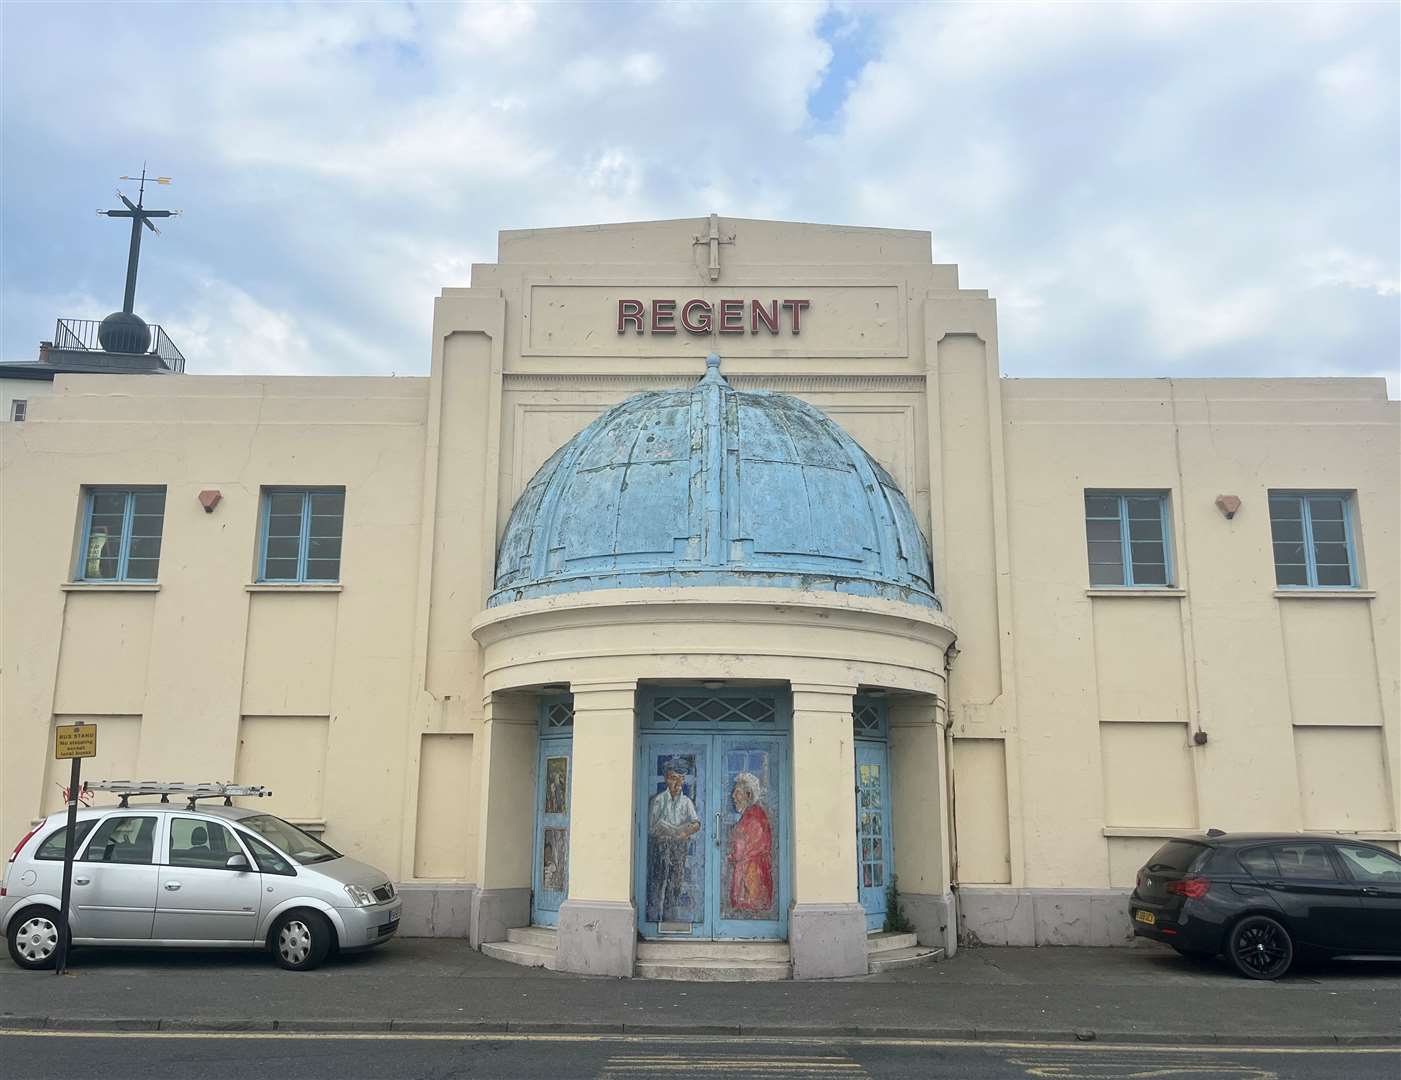 The derelict Regent Cinema in Deal is set to be flattened and rebuilt